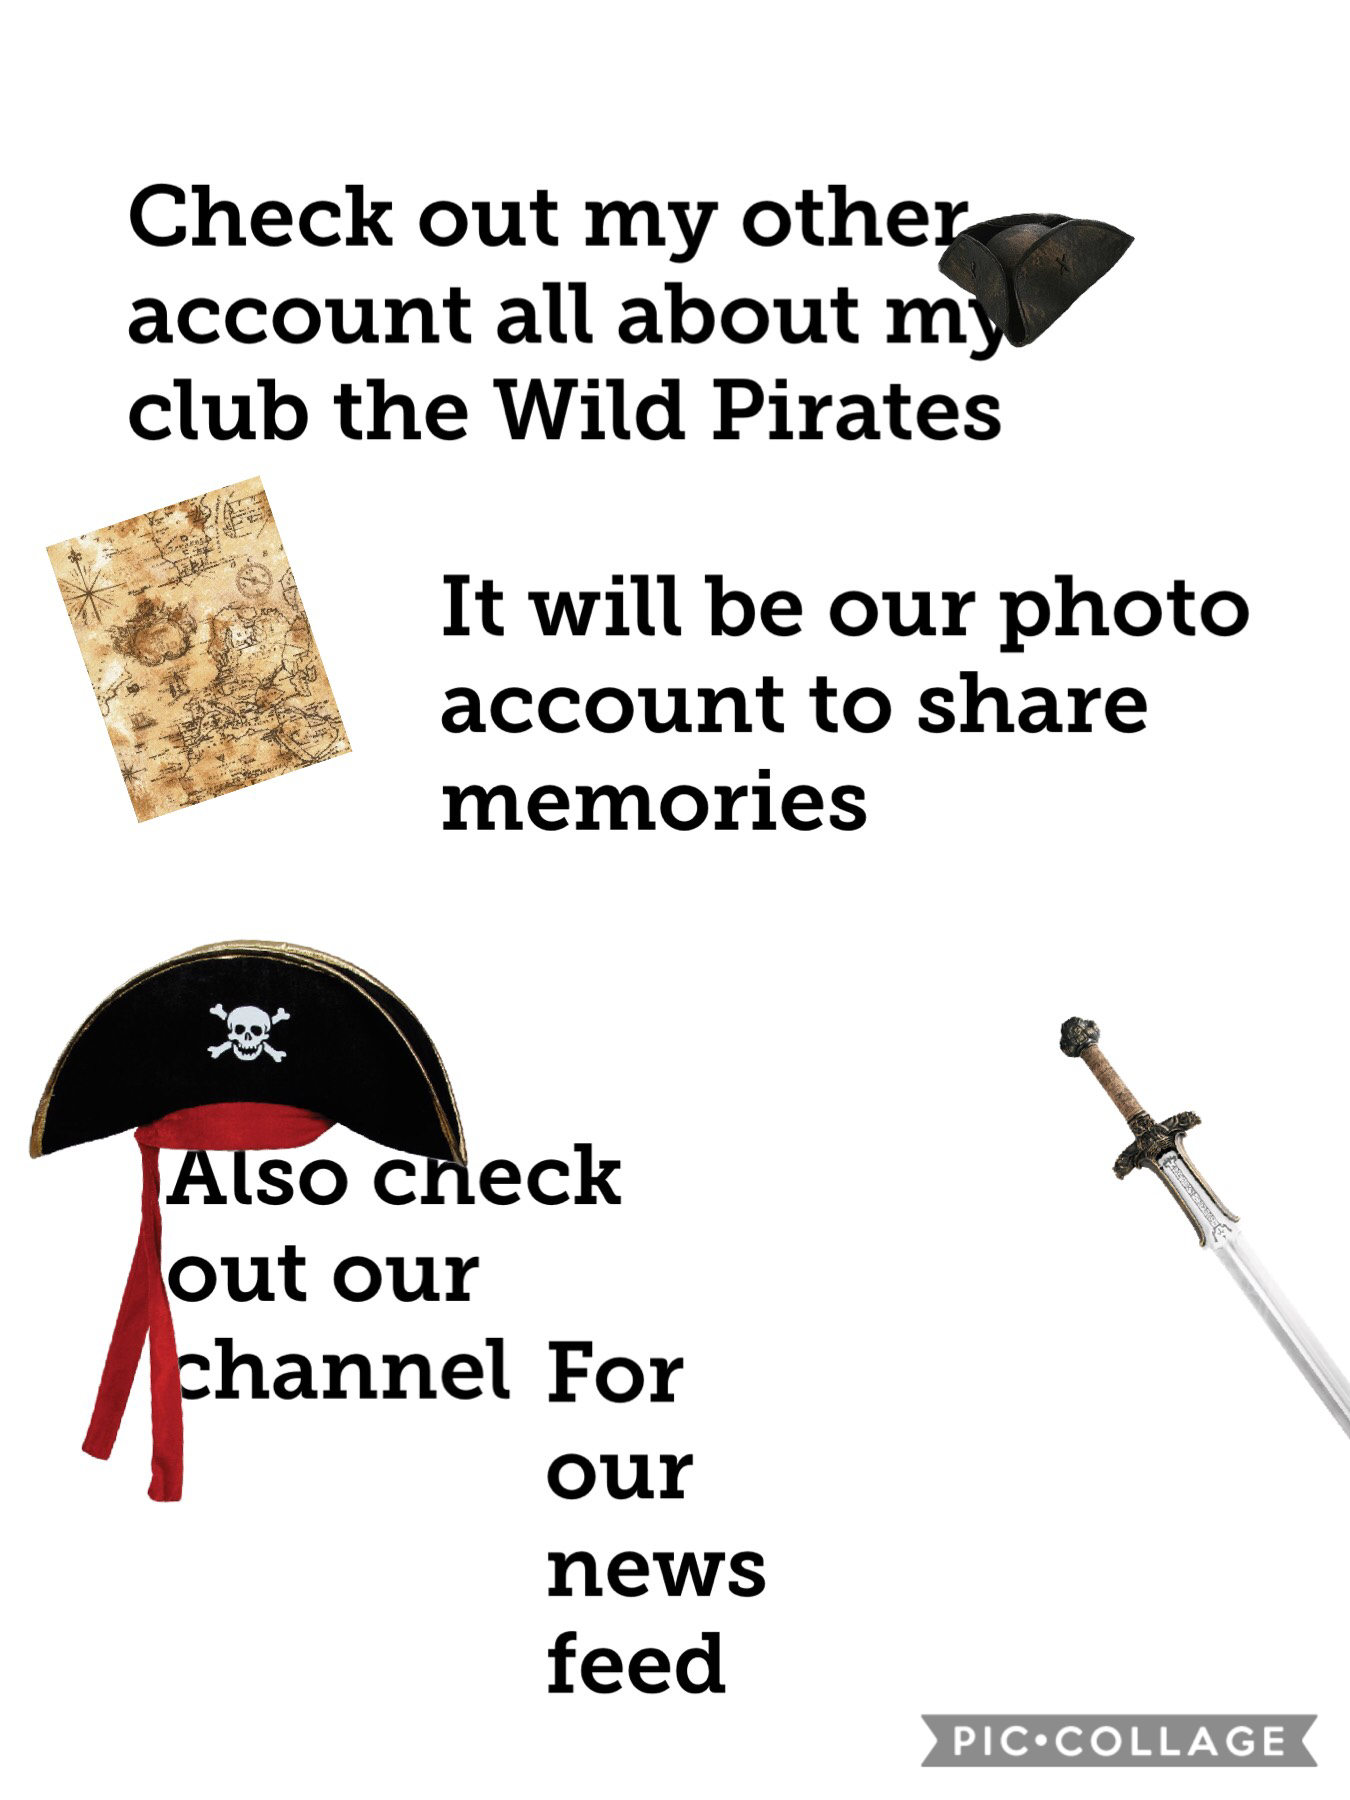 The wild pirates info